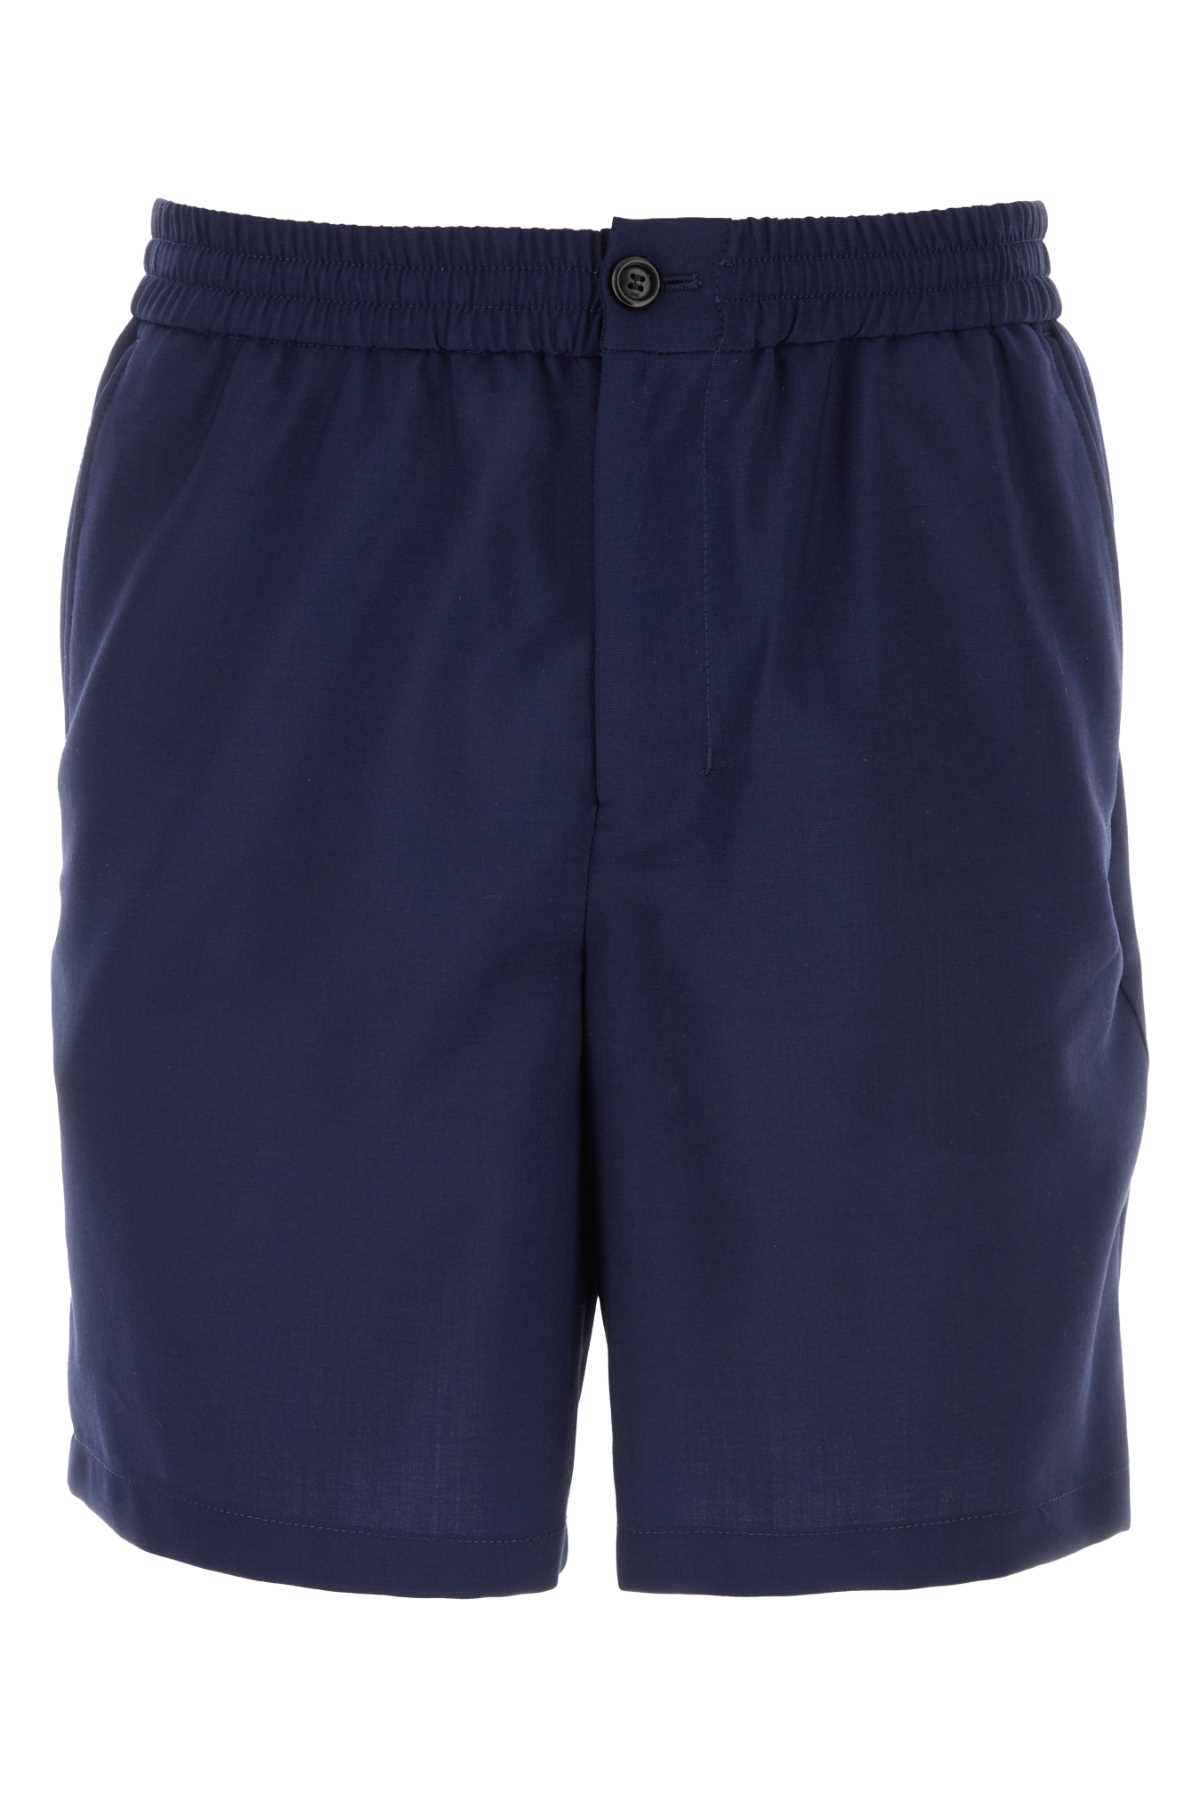 Navy Blue Twill Bermuda Shorts